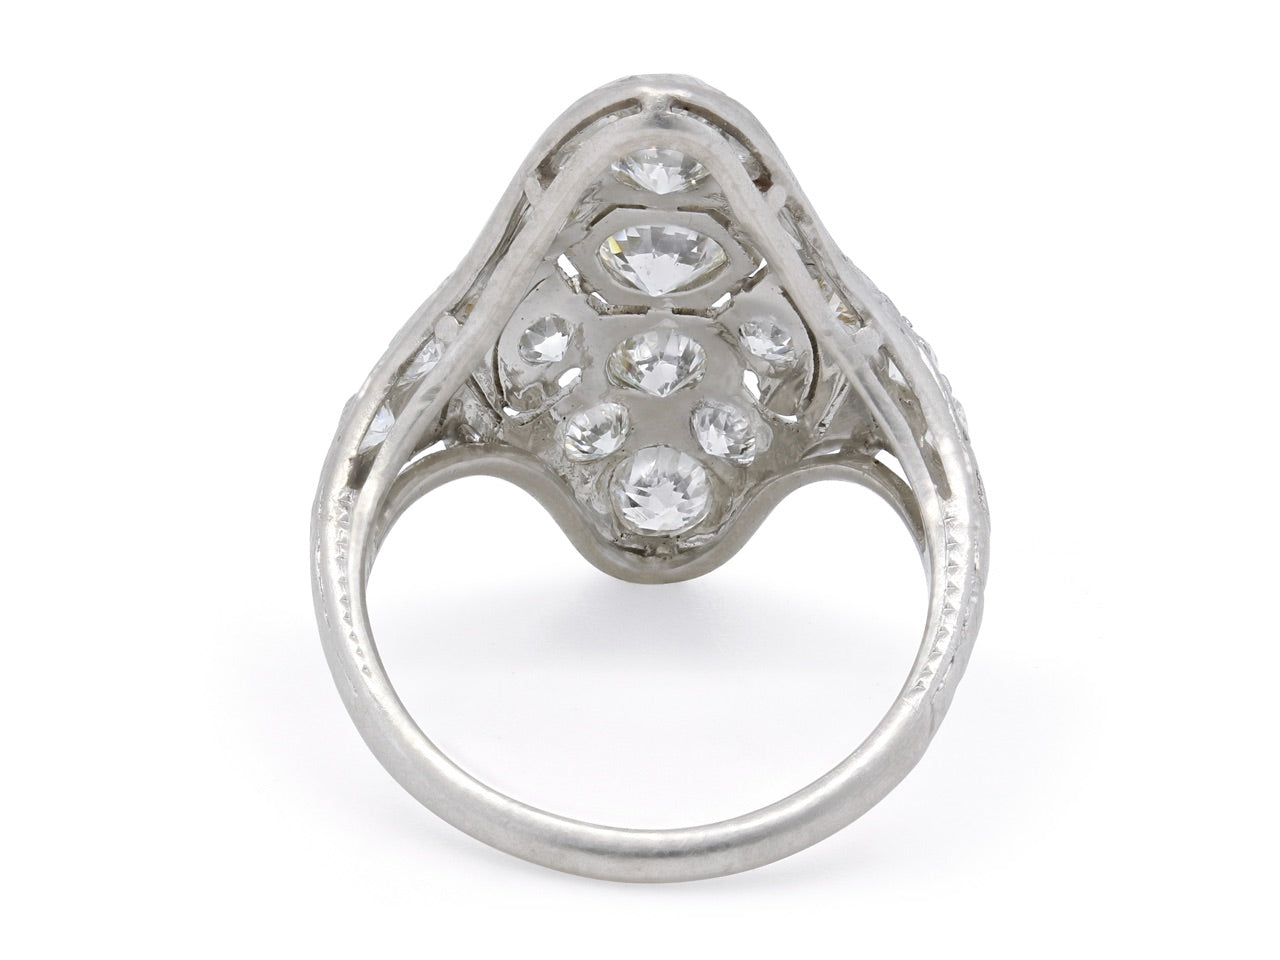 Antique Edwardian Diamond Filigree Ring in Platinum